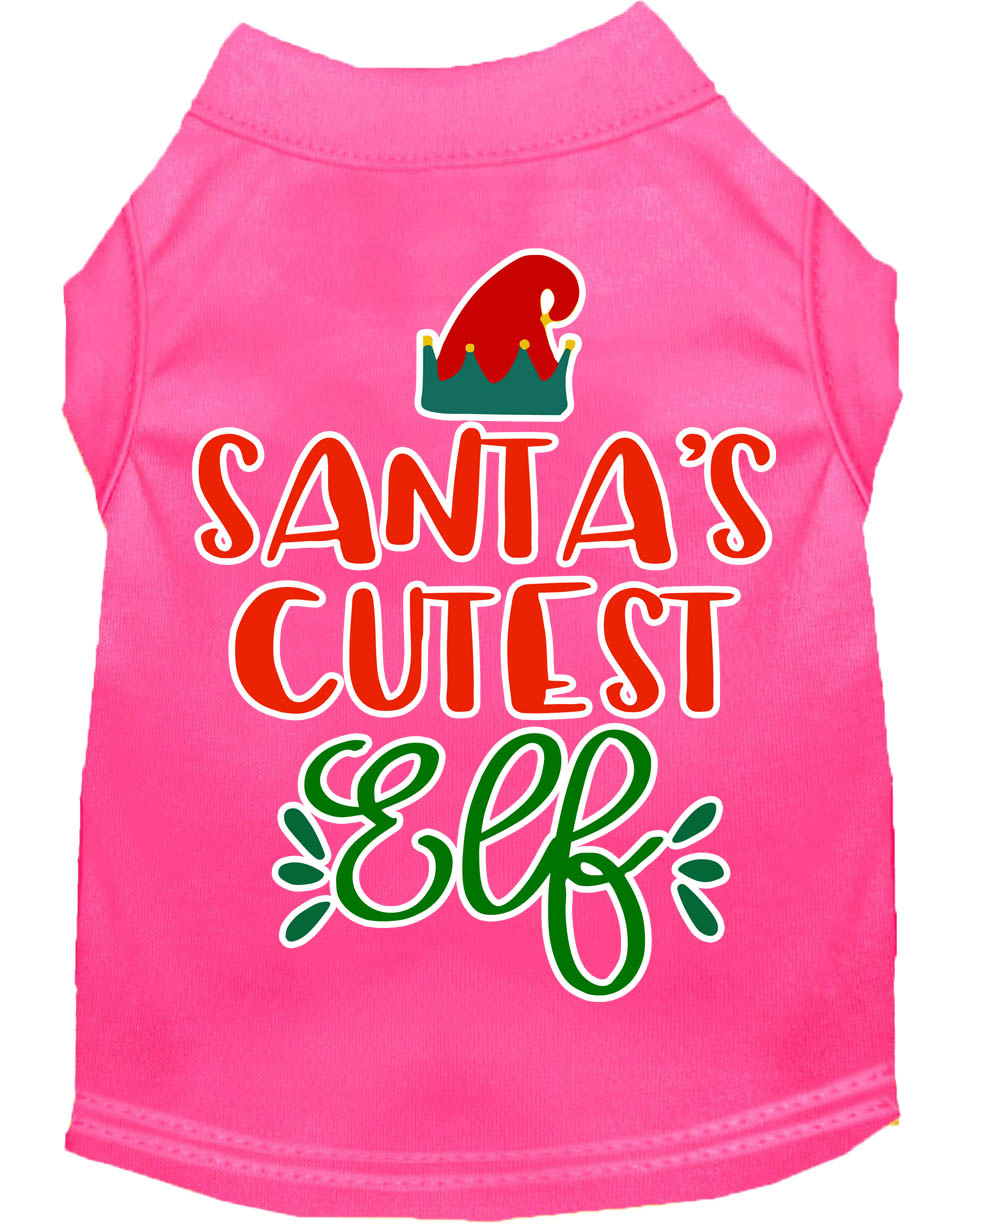 Santa's Cutest Elf Screen Print Dog Shirt Bright Pink XS